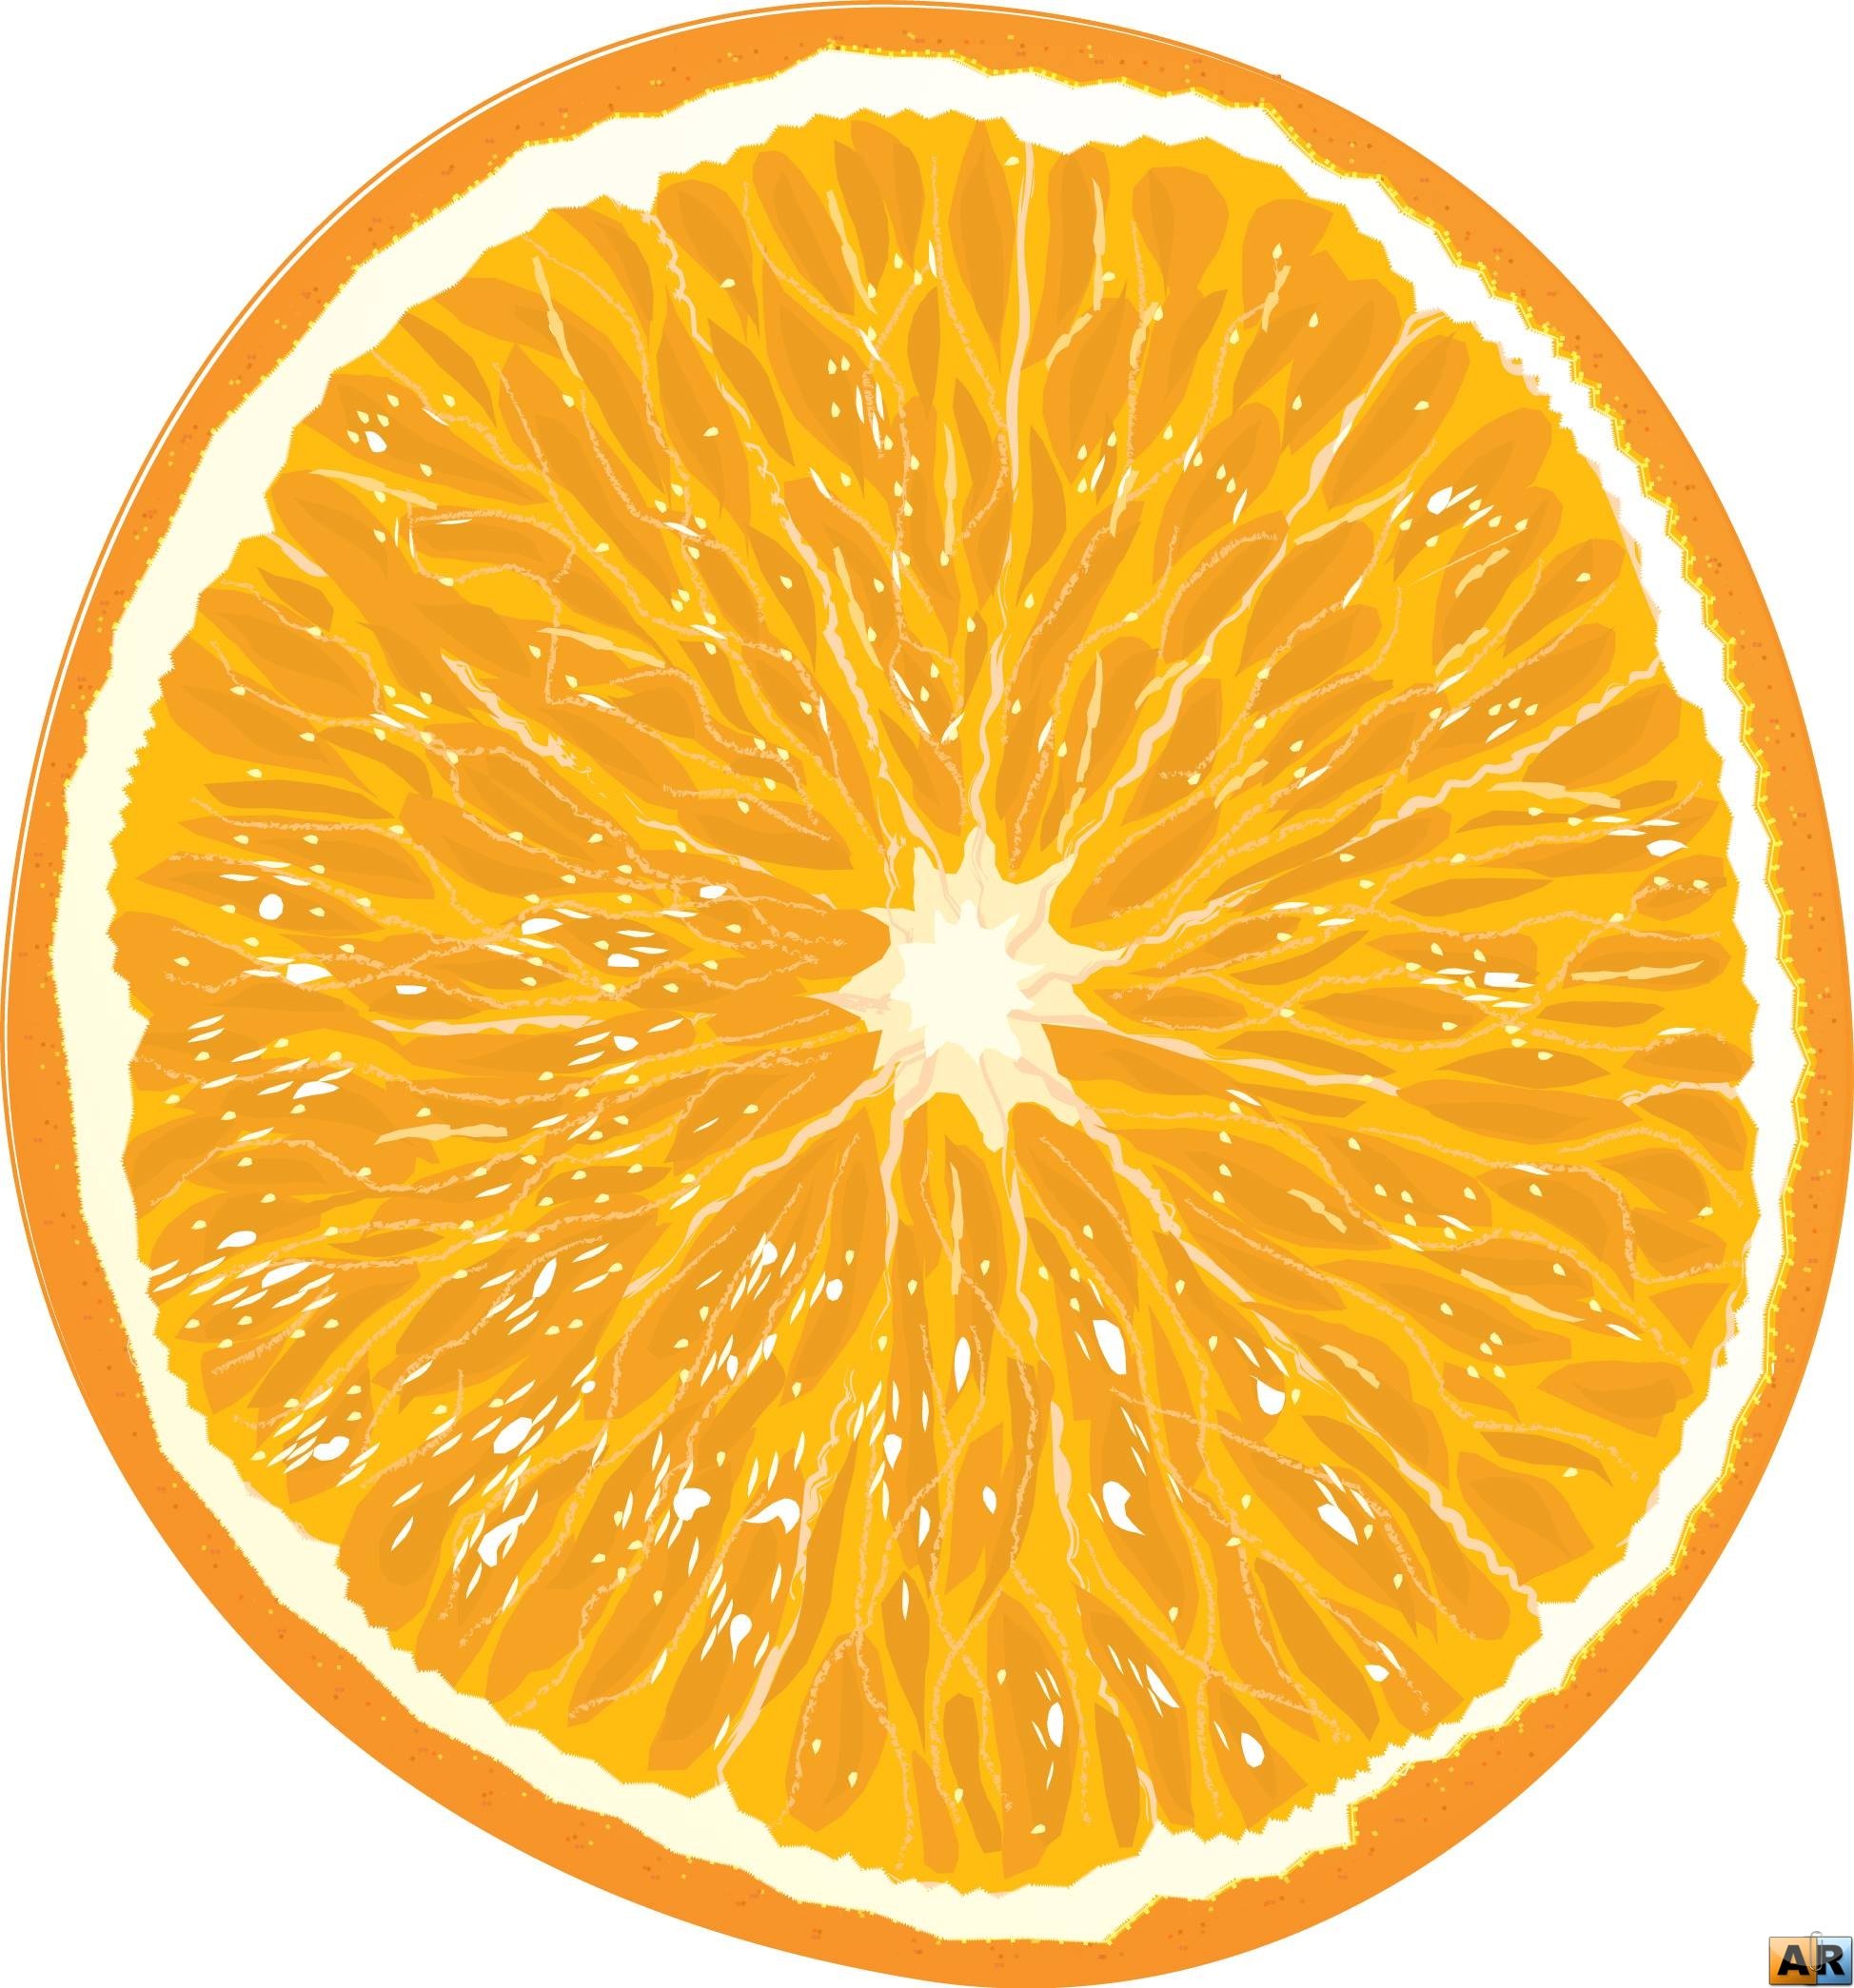 Кк апельсина. Срез апельсина. Апельсин в разрезе. Апельсин на прозрачном фоне. Долька апельсина.